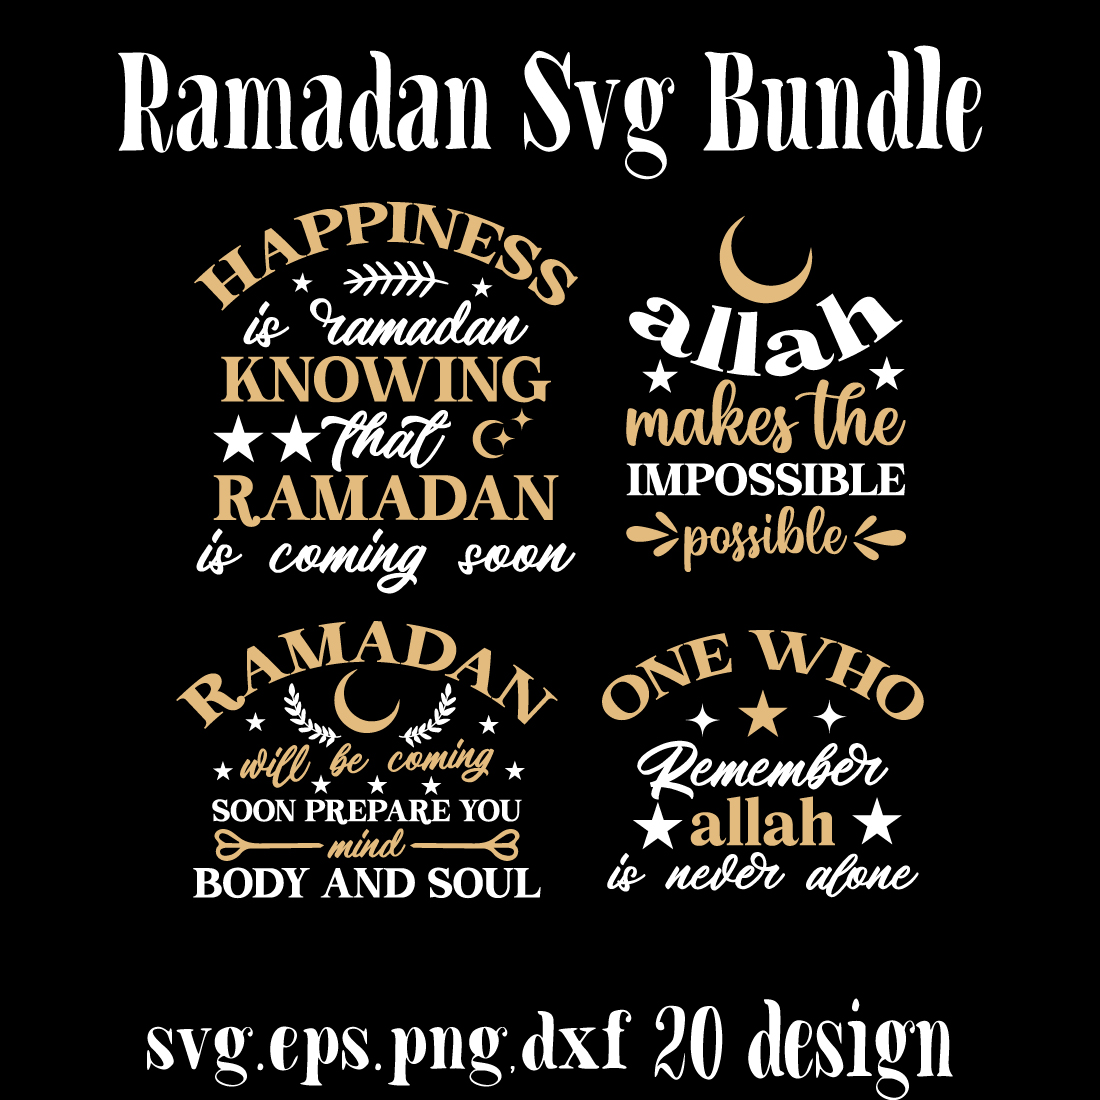 Ramadan svg bundle preview image.